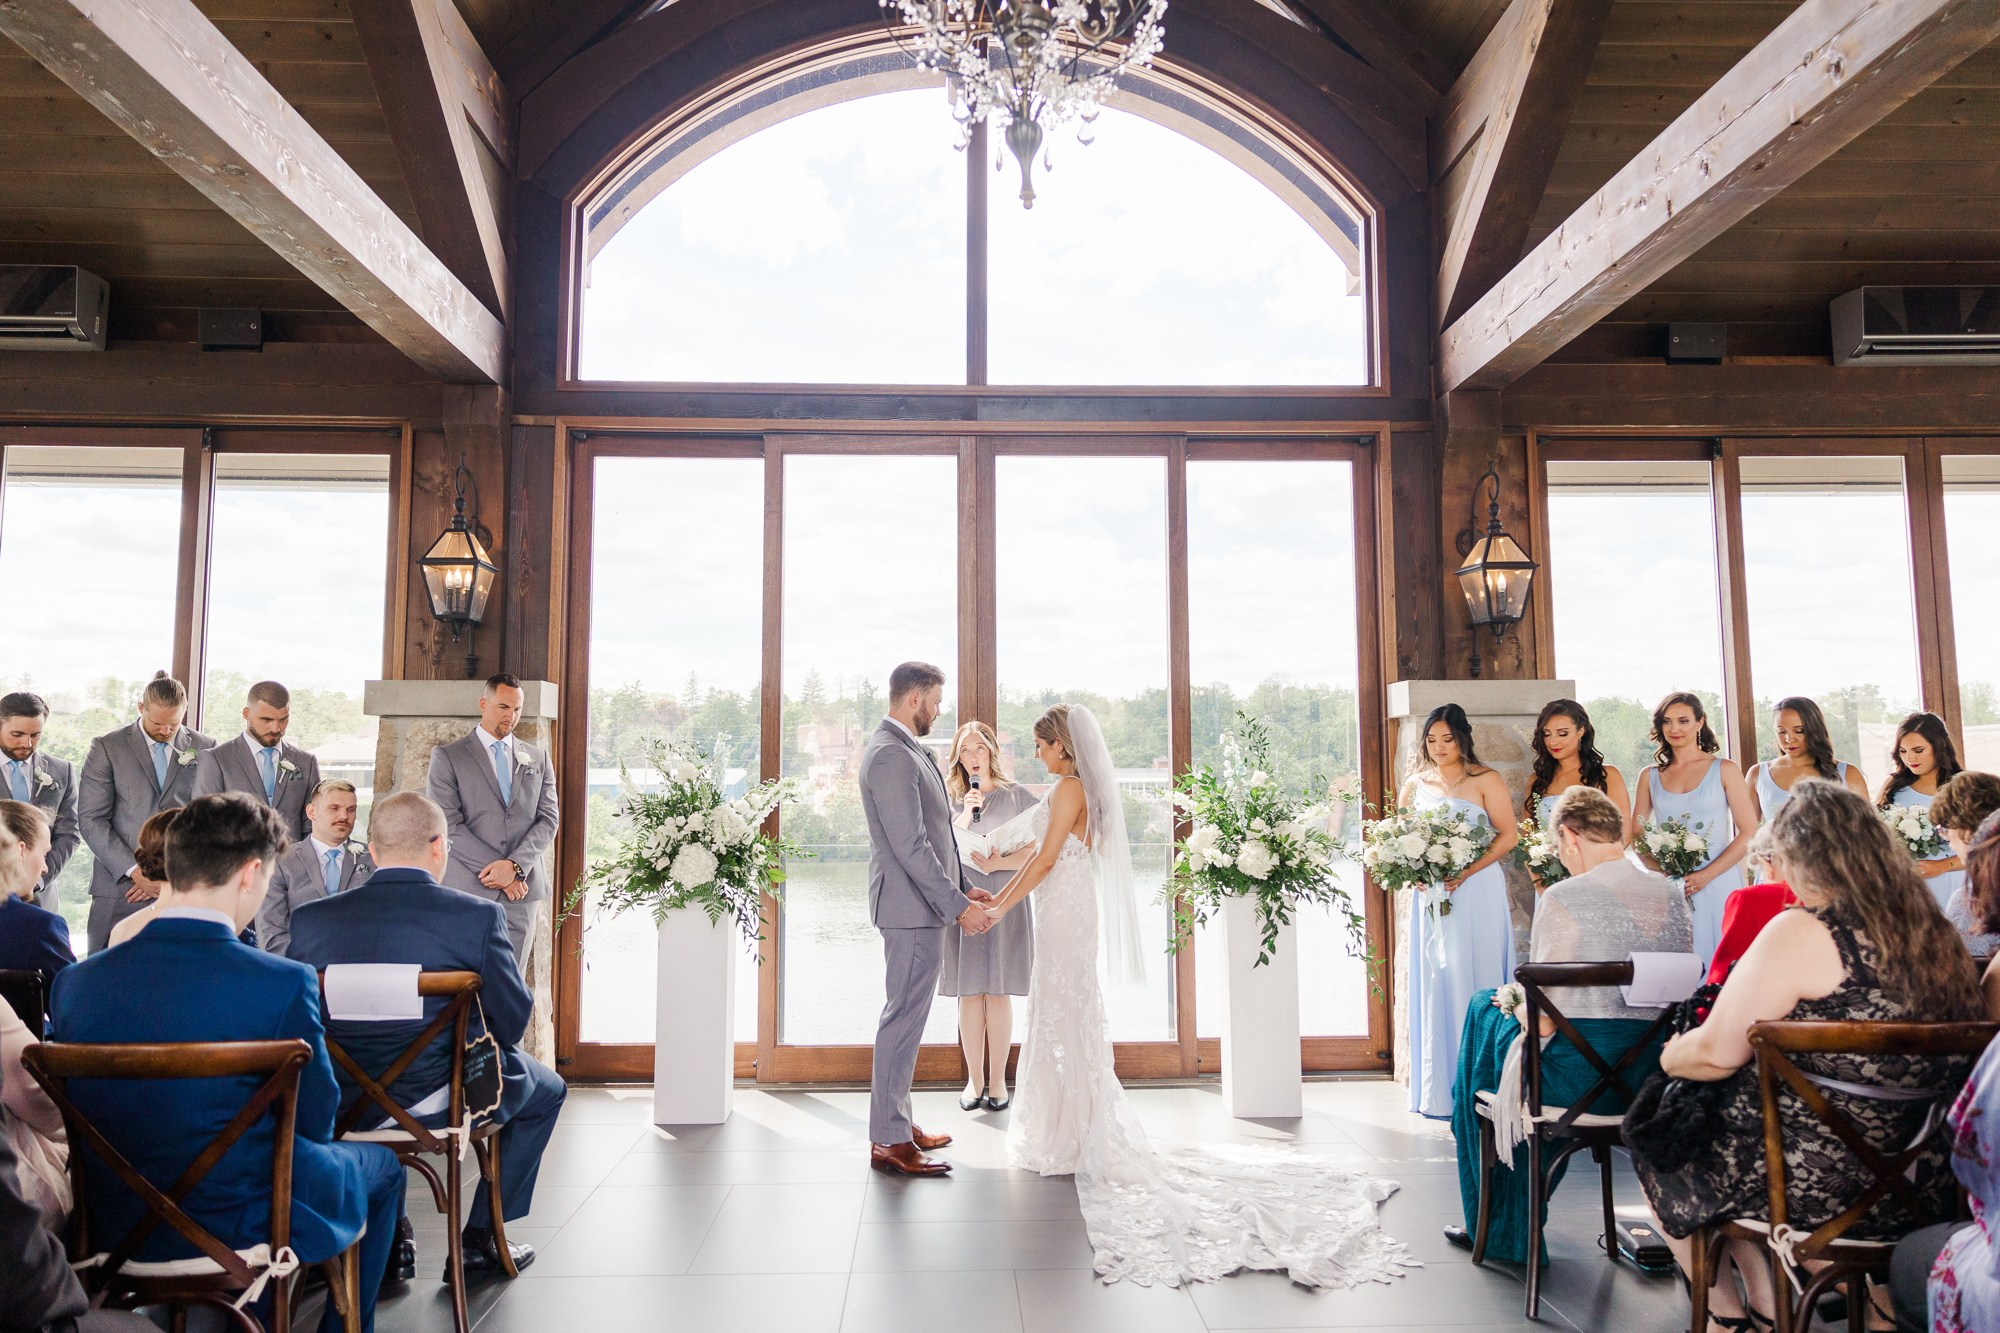 Stunning Cambridge Mill Wedding in Ontario